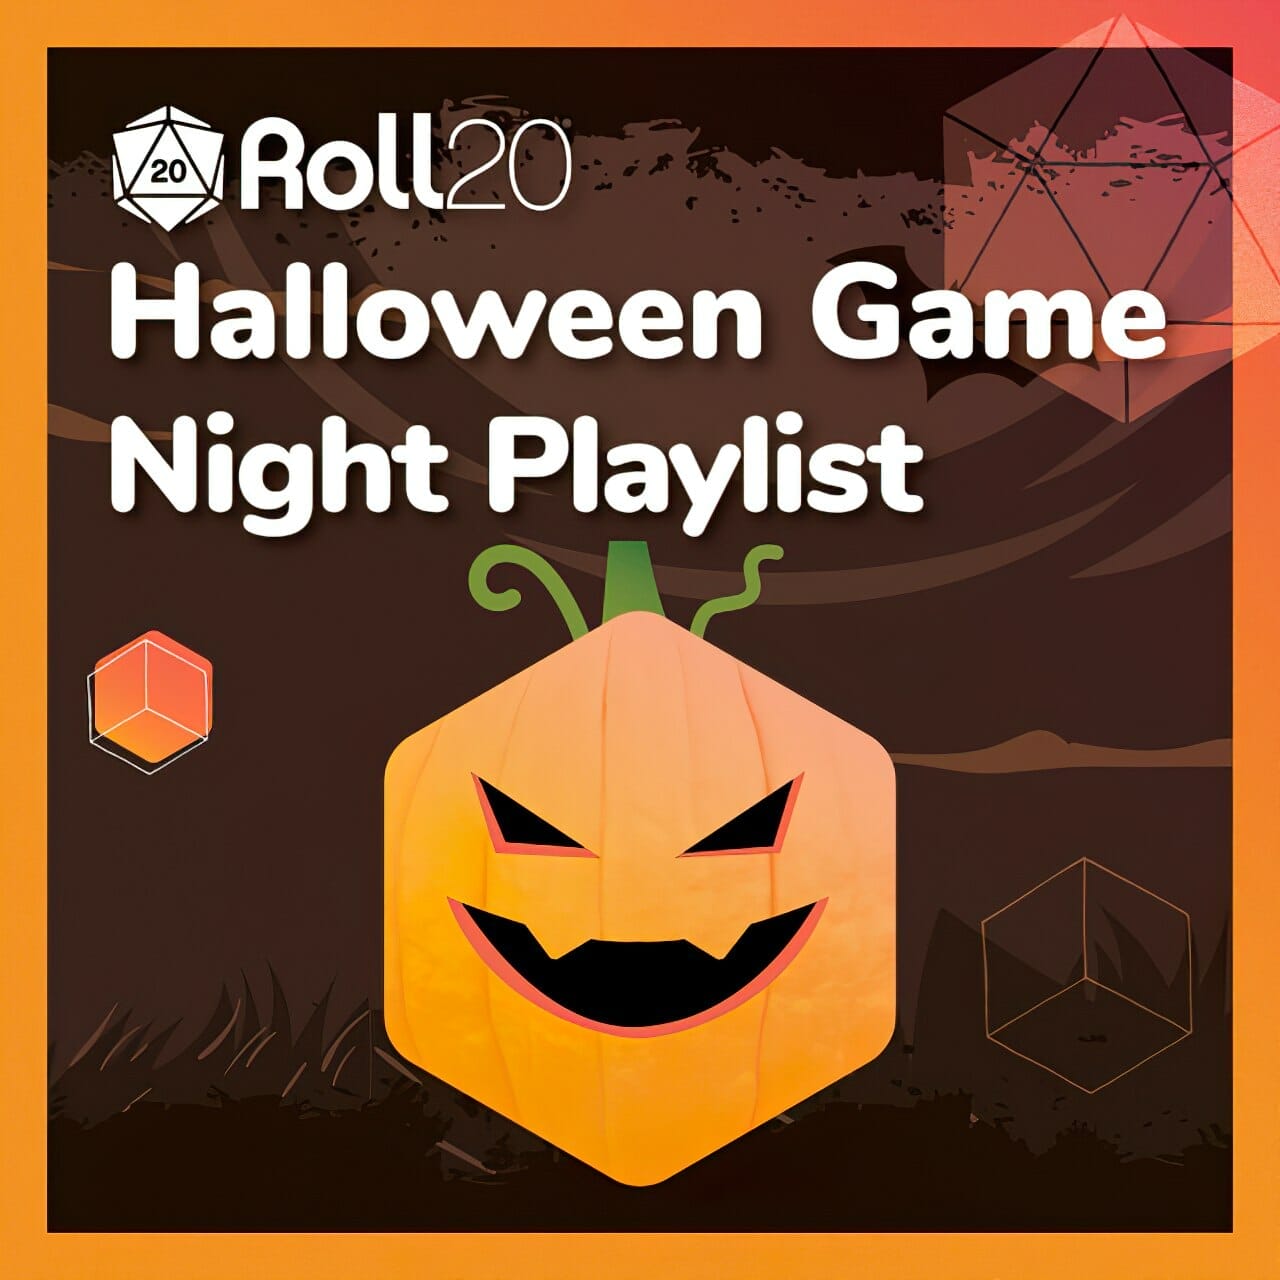 Roll20 Halloween Game Night Playlist